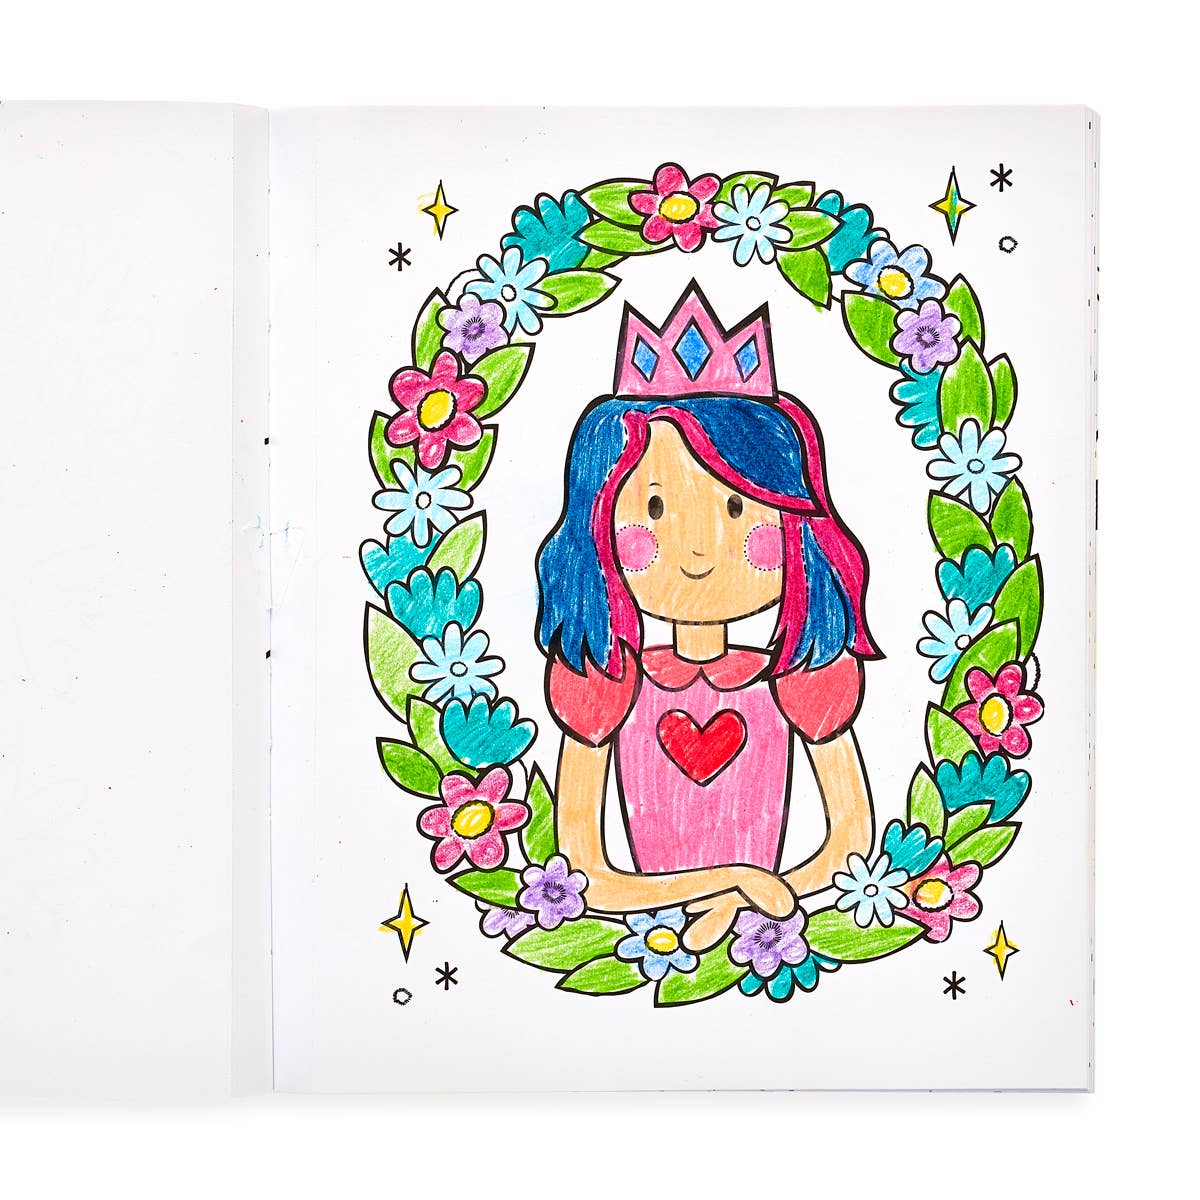 Color-in' Book - Princesses & Fairies